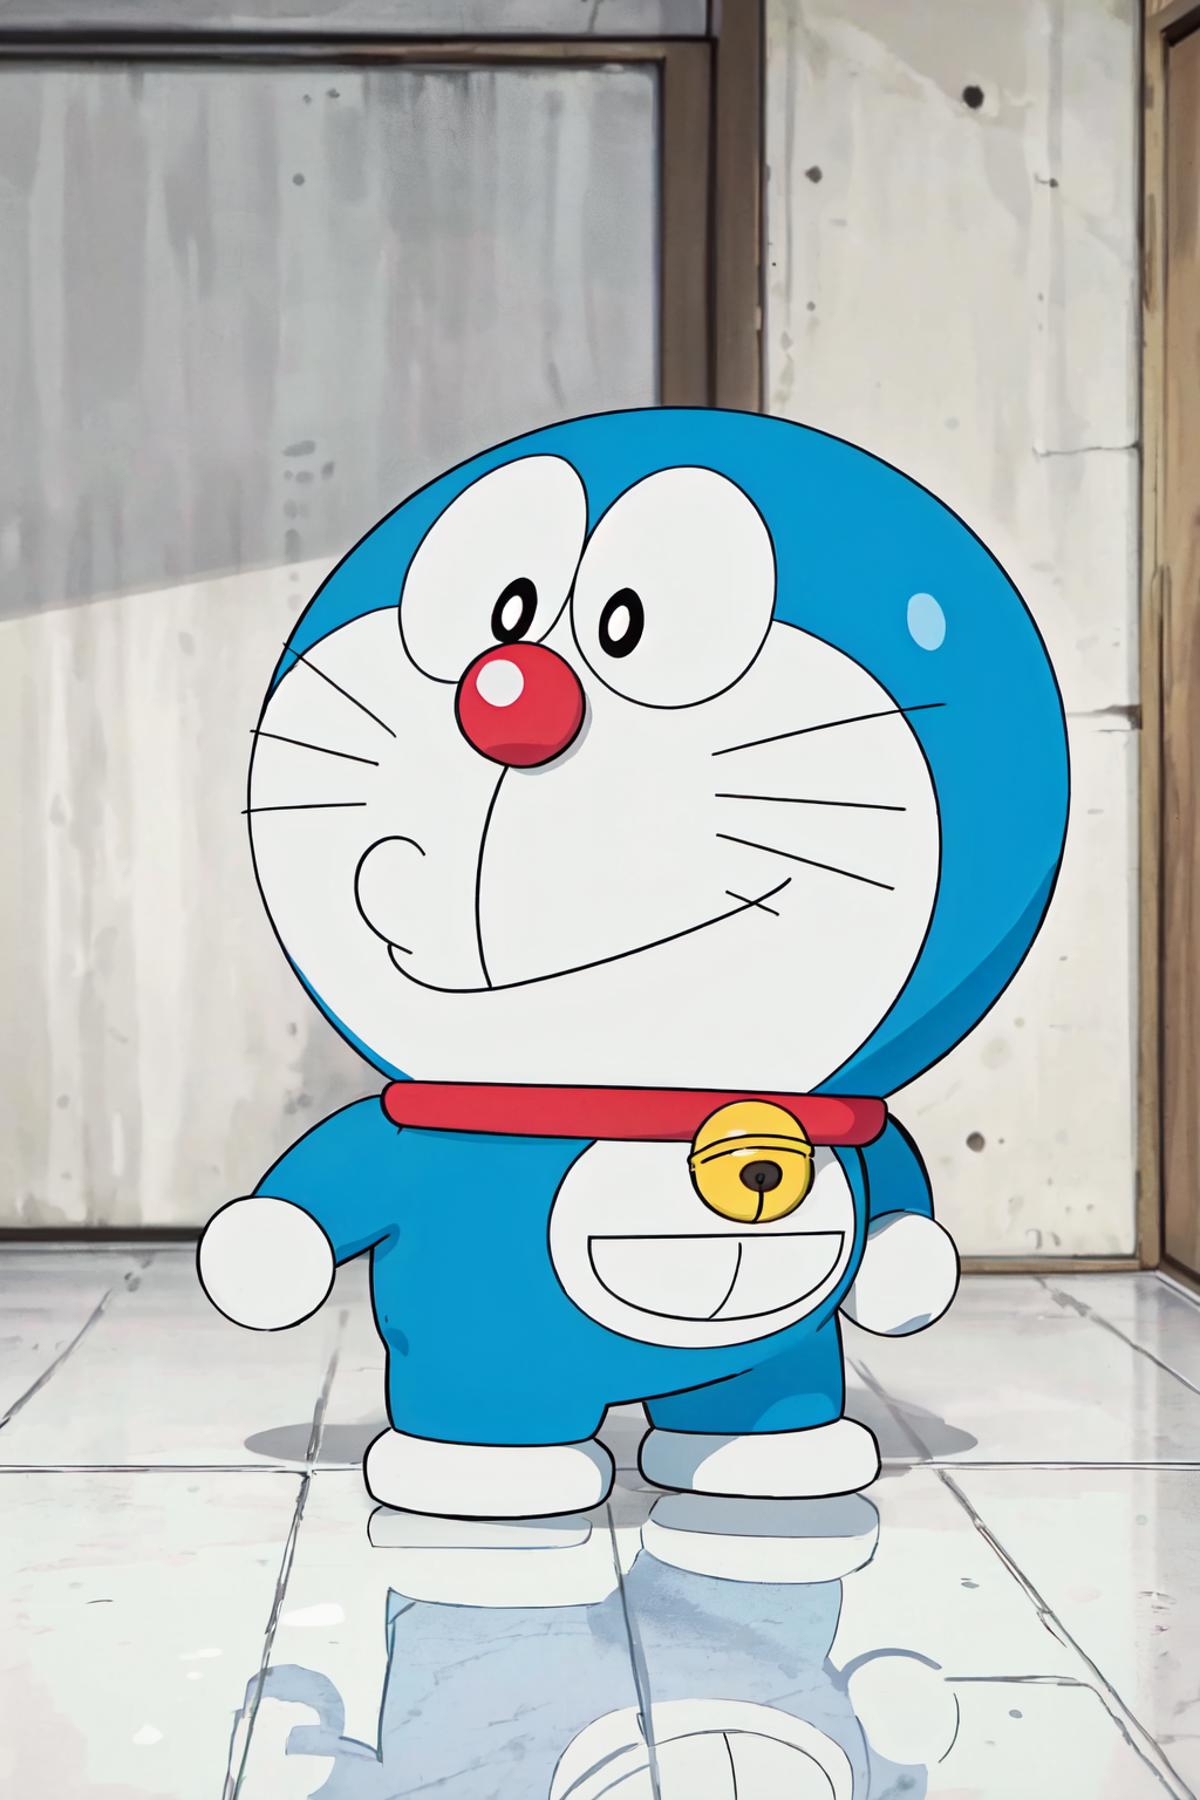 Doraemon/哆啦a梦/ドラえもん image by kokurine